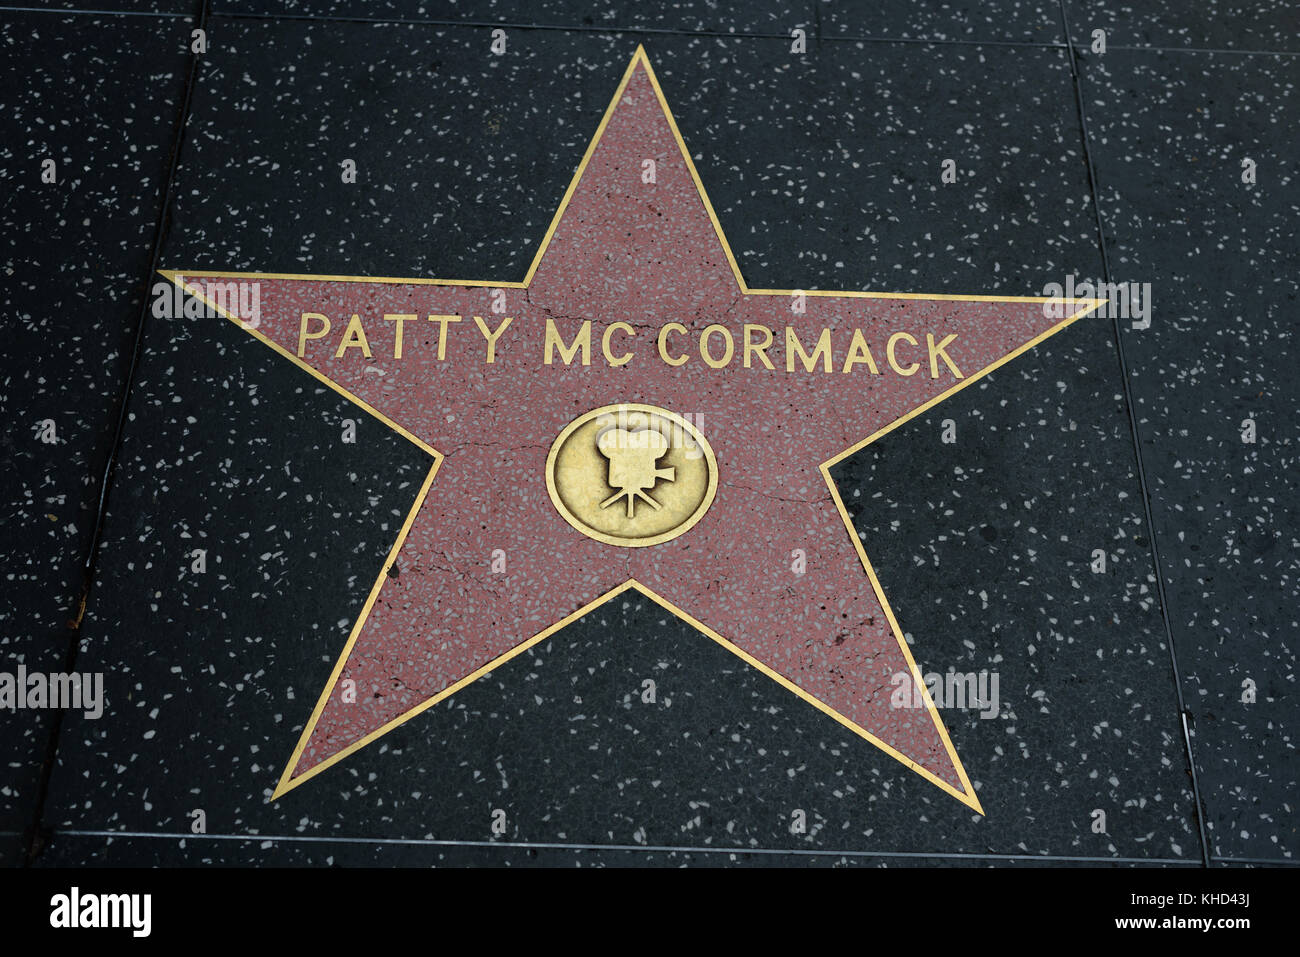 HOLLYWOOD, CA - DEZEMBER 06: Patty Mc Cormack Star auf dem Hollywood Walk of Fame in Hollywood, Kalifornien am 6. Dezember 2016. Stockfoto